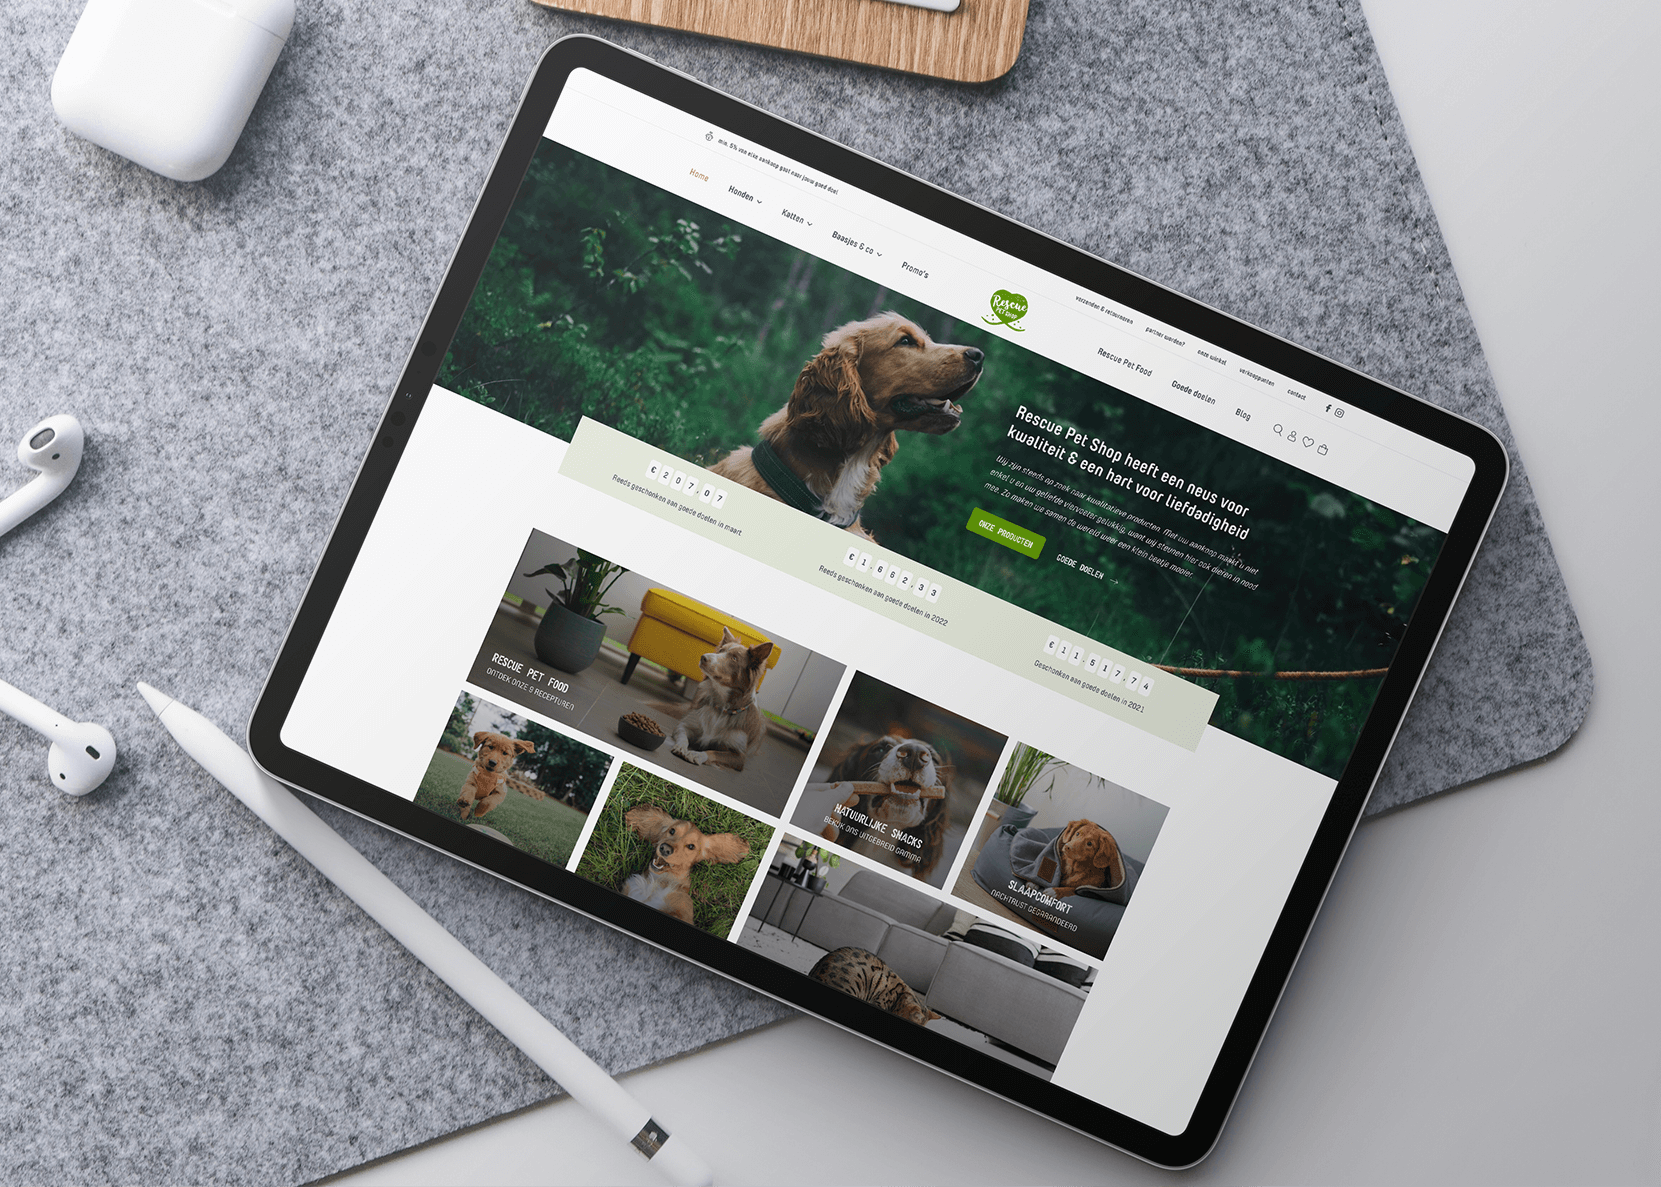 Project Rescue Pet Shop | lsDevign - Custom Web Development and Webdesign in Lichtervelde